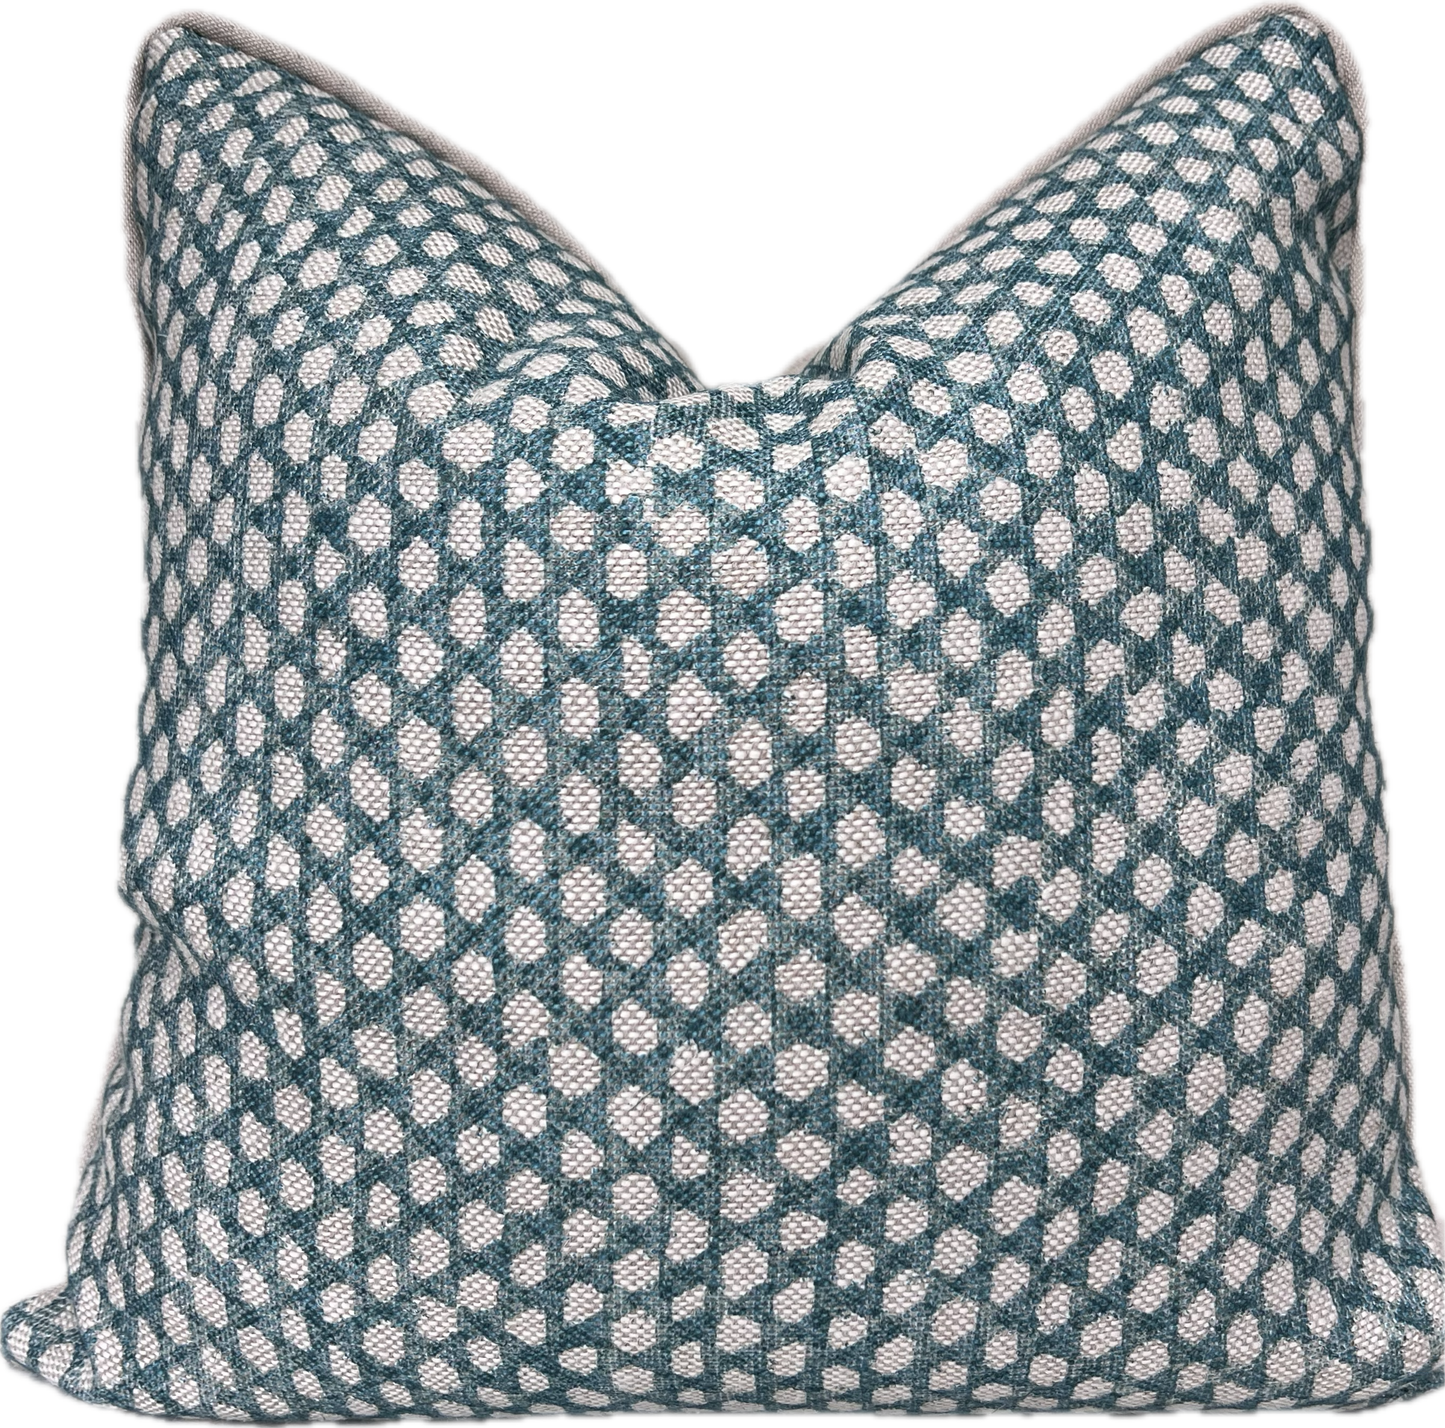 Fermoie Wicker Luxury Designer Decorative Teal Beige Linen Cushion Pillow Throw Cover